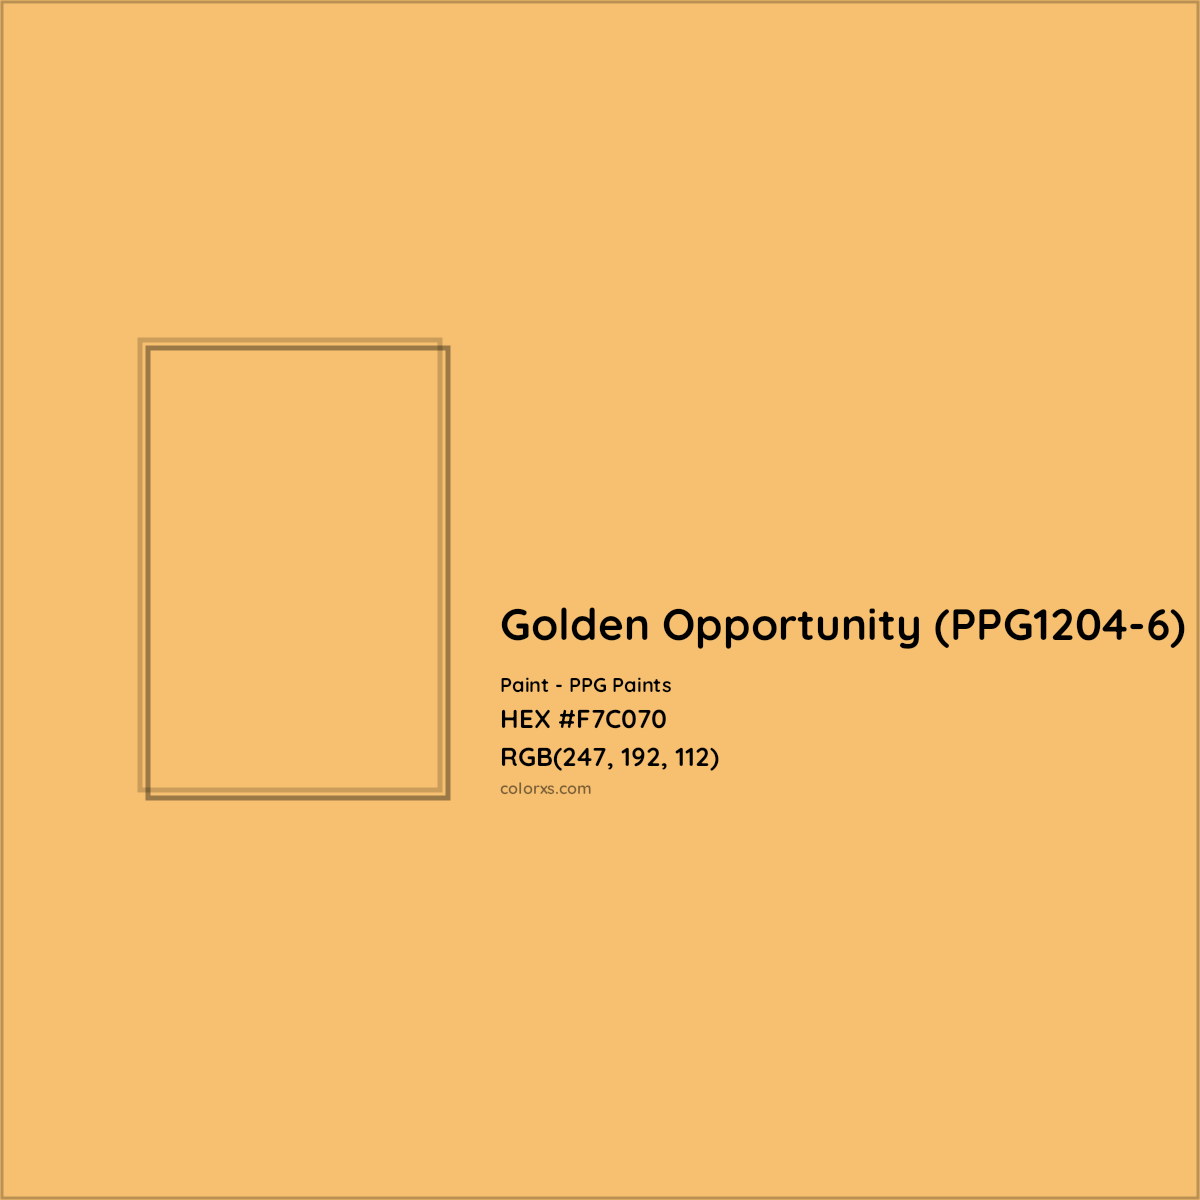 HEX #F7C070 Golden Opportunity (PPG1204-6) Paint PPG Paints - Color Code